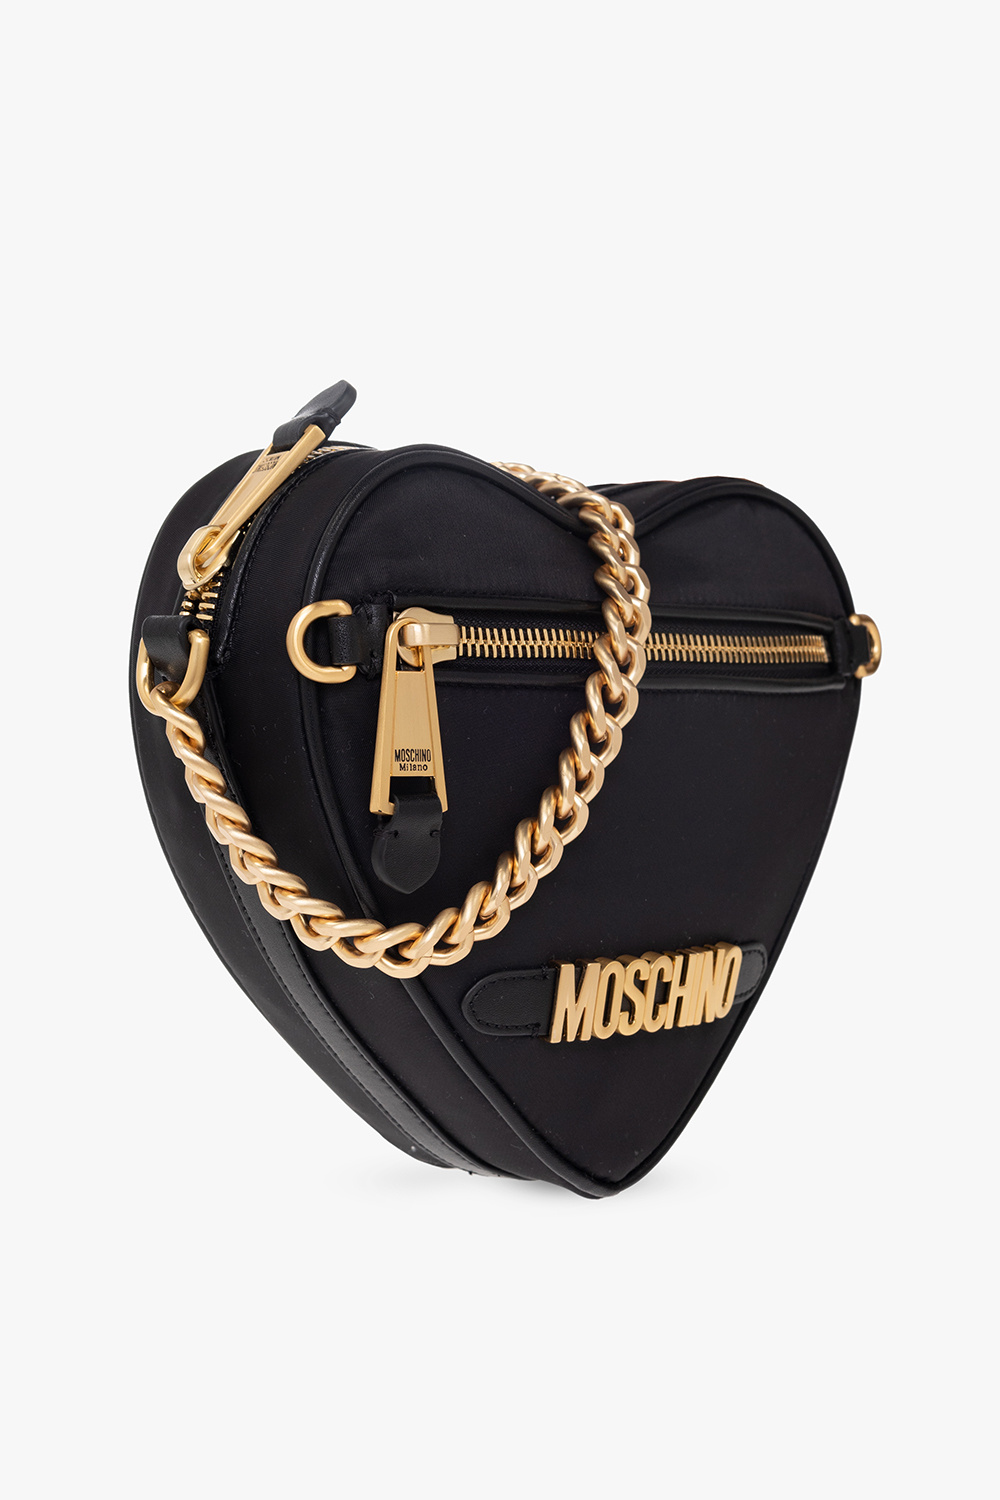 Moschino Heart-shaped shoulder Statement bag